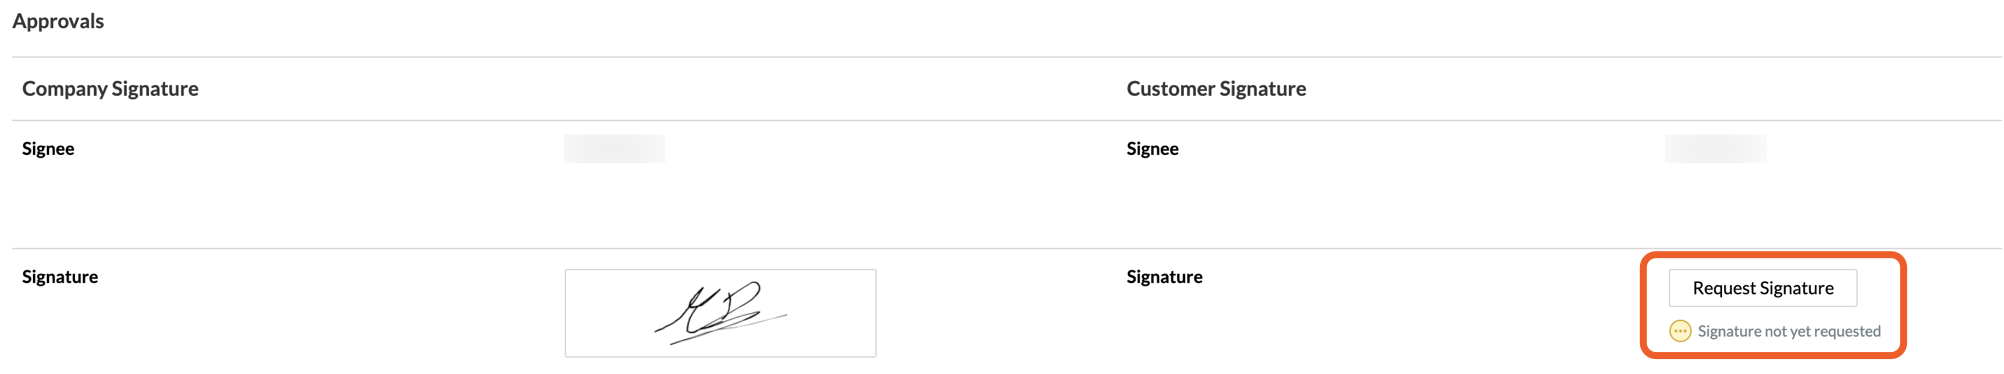 request-signature-button.png